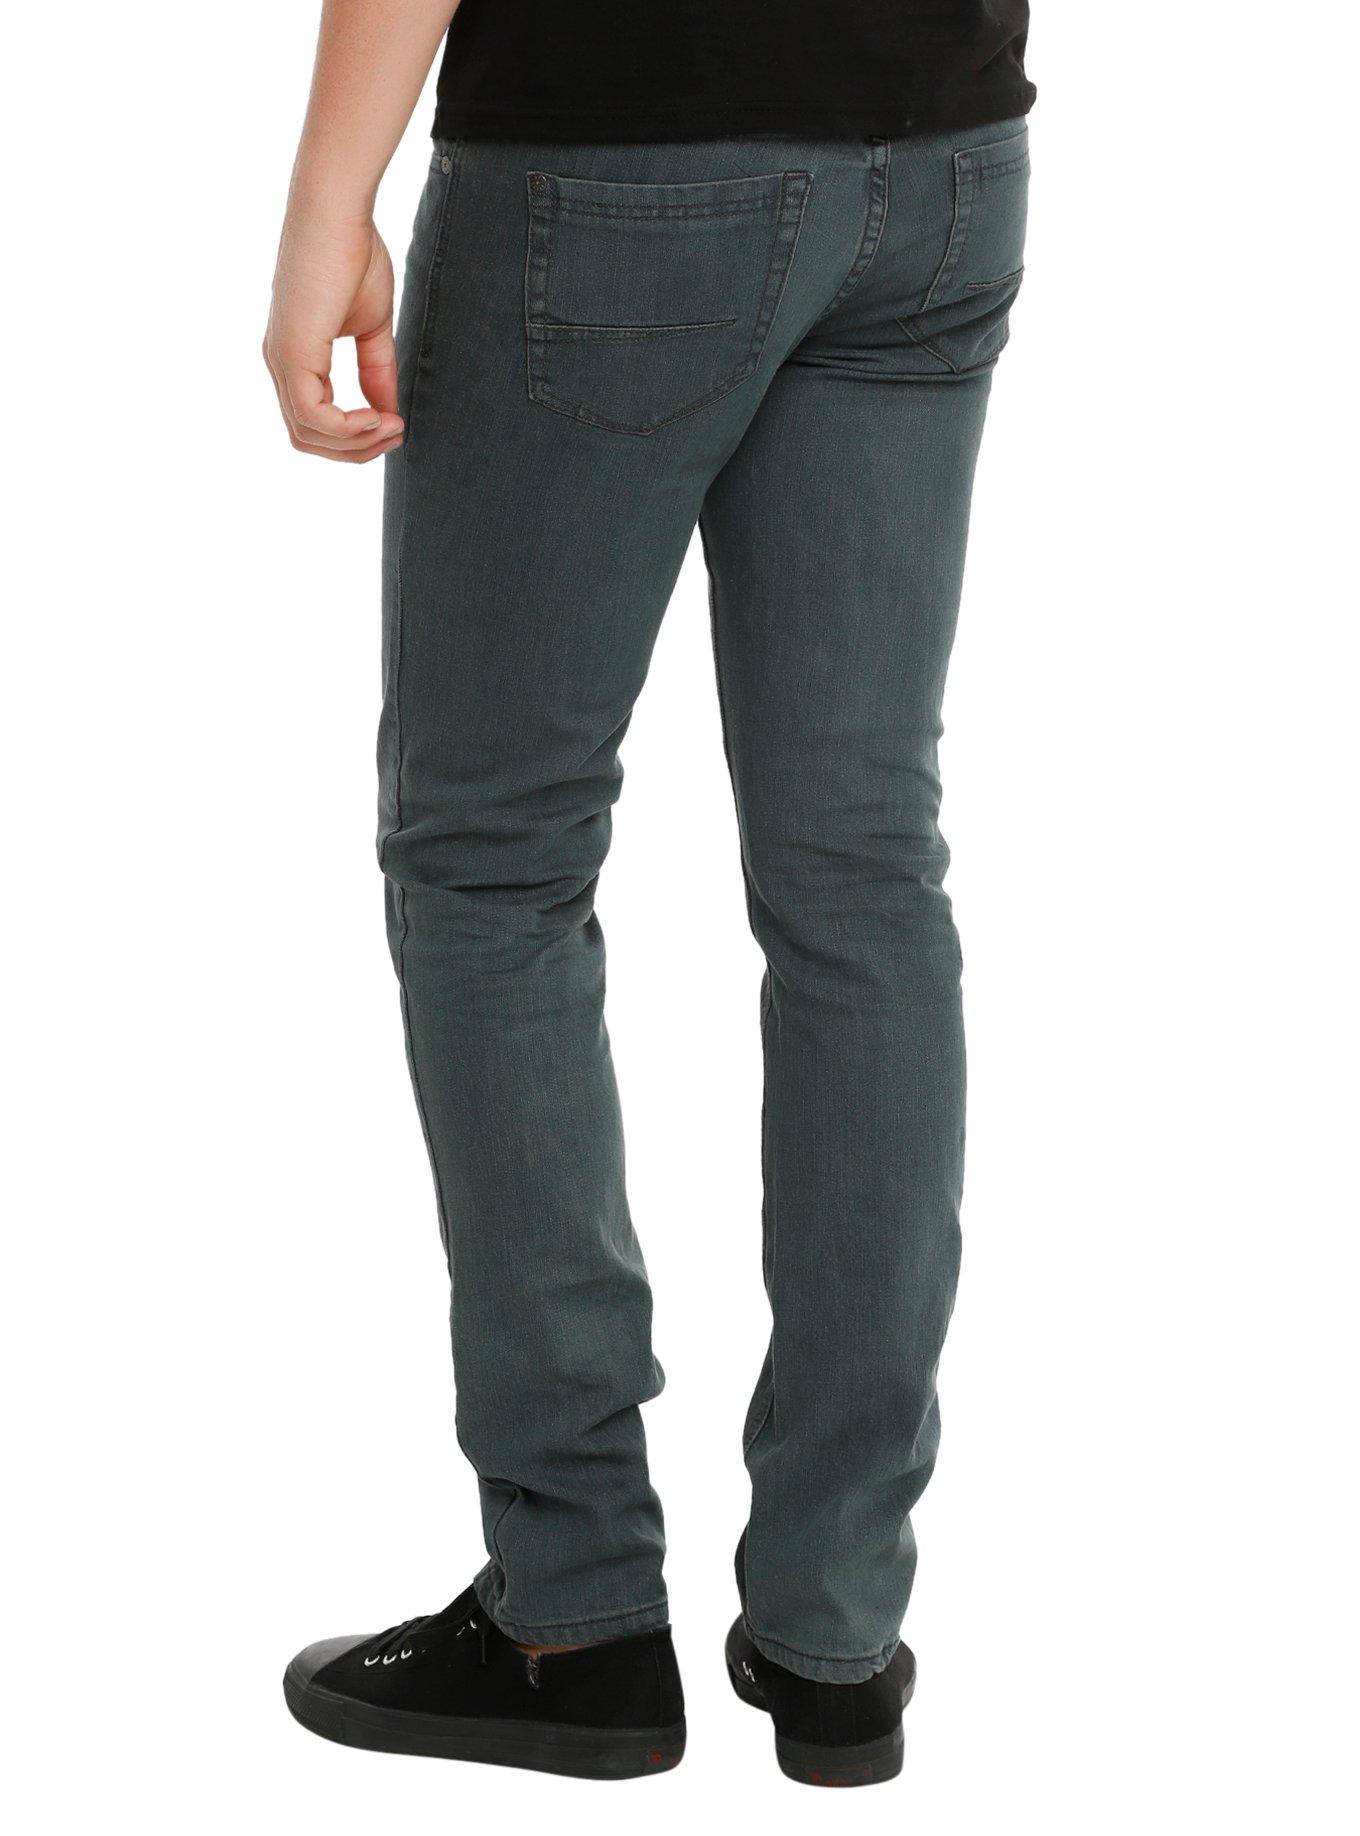 Indigo Charcoal Overdye Skinny Jeans, DARK BLUE, alternate